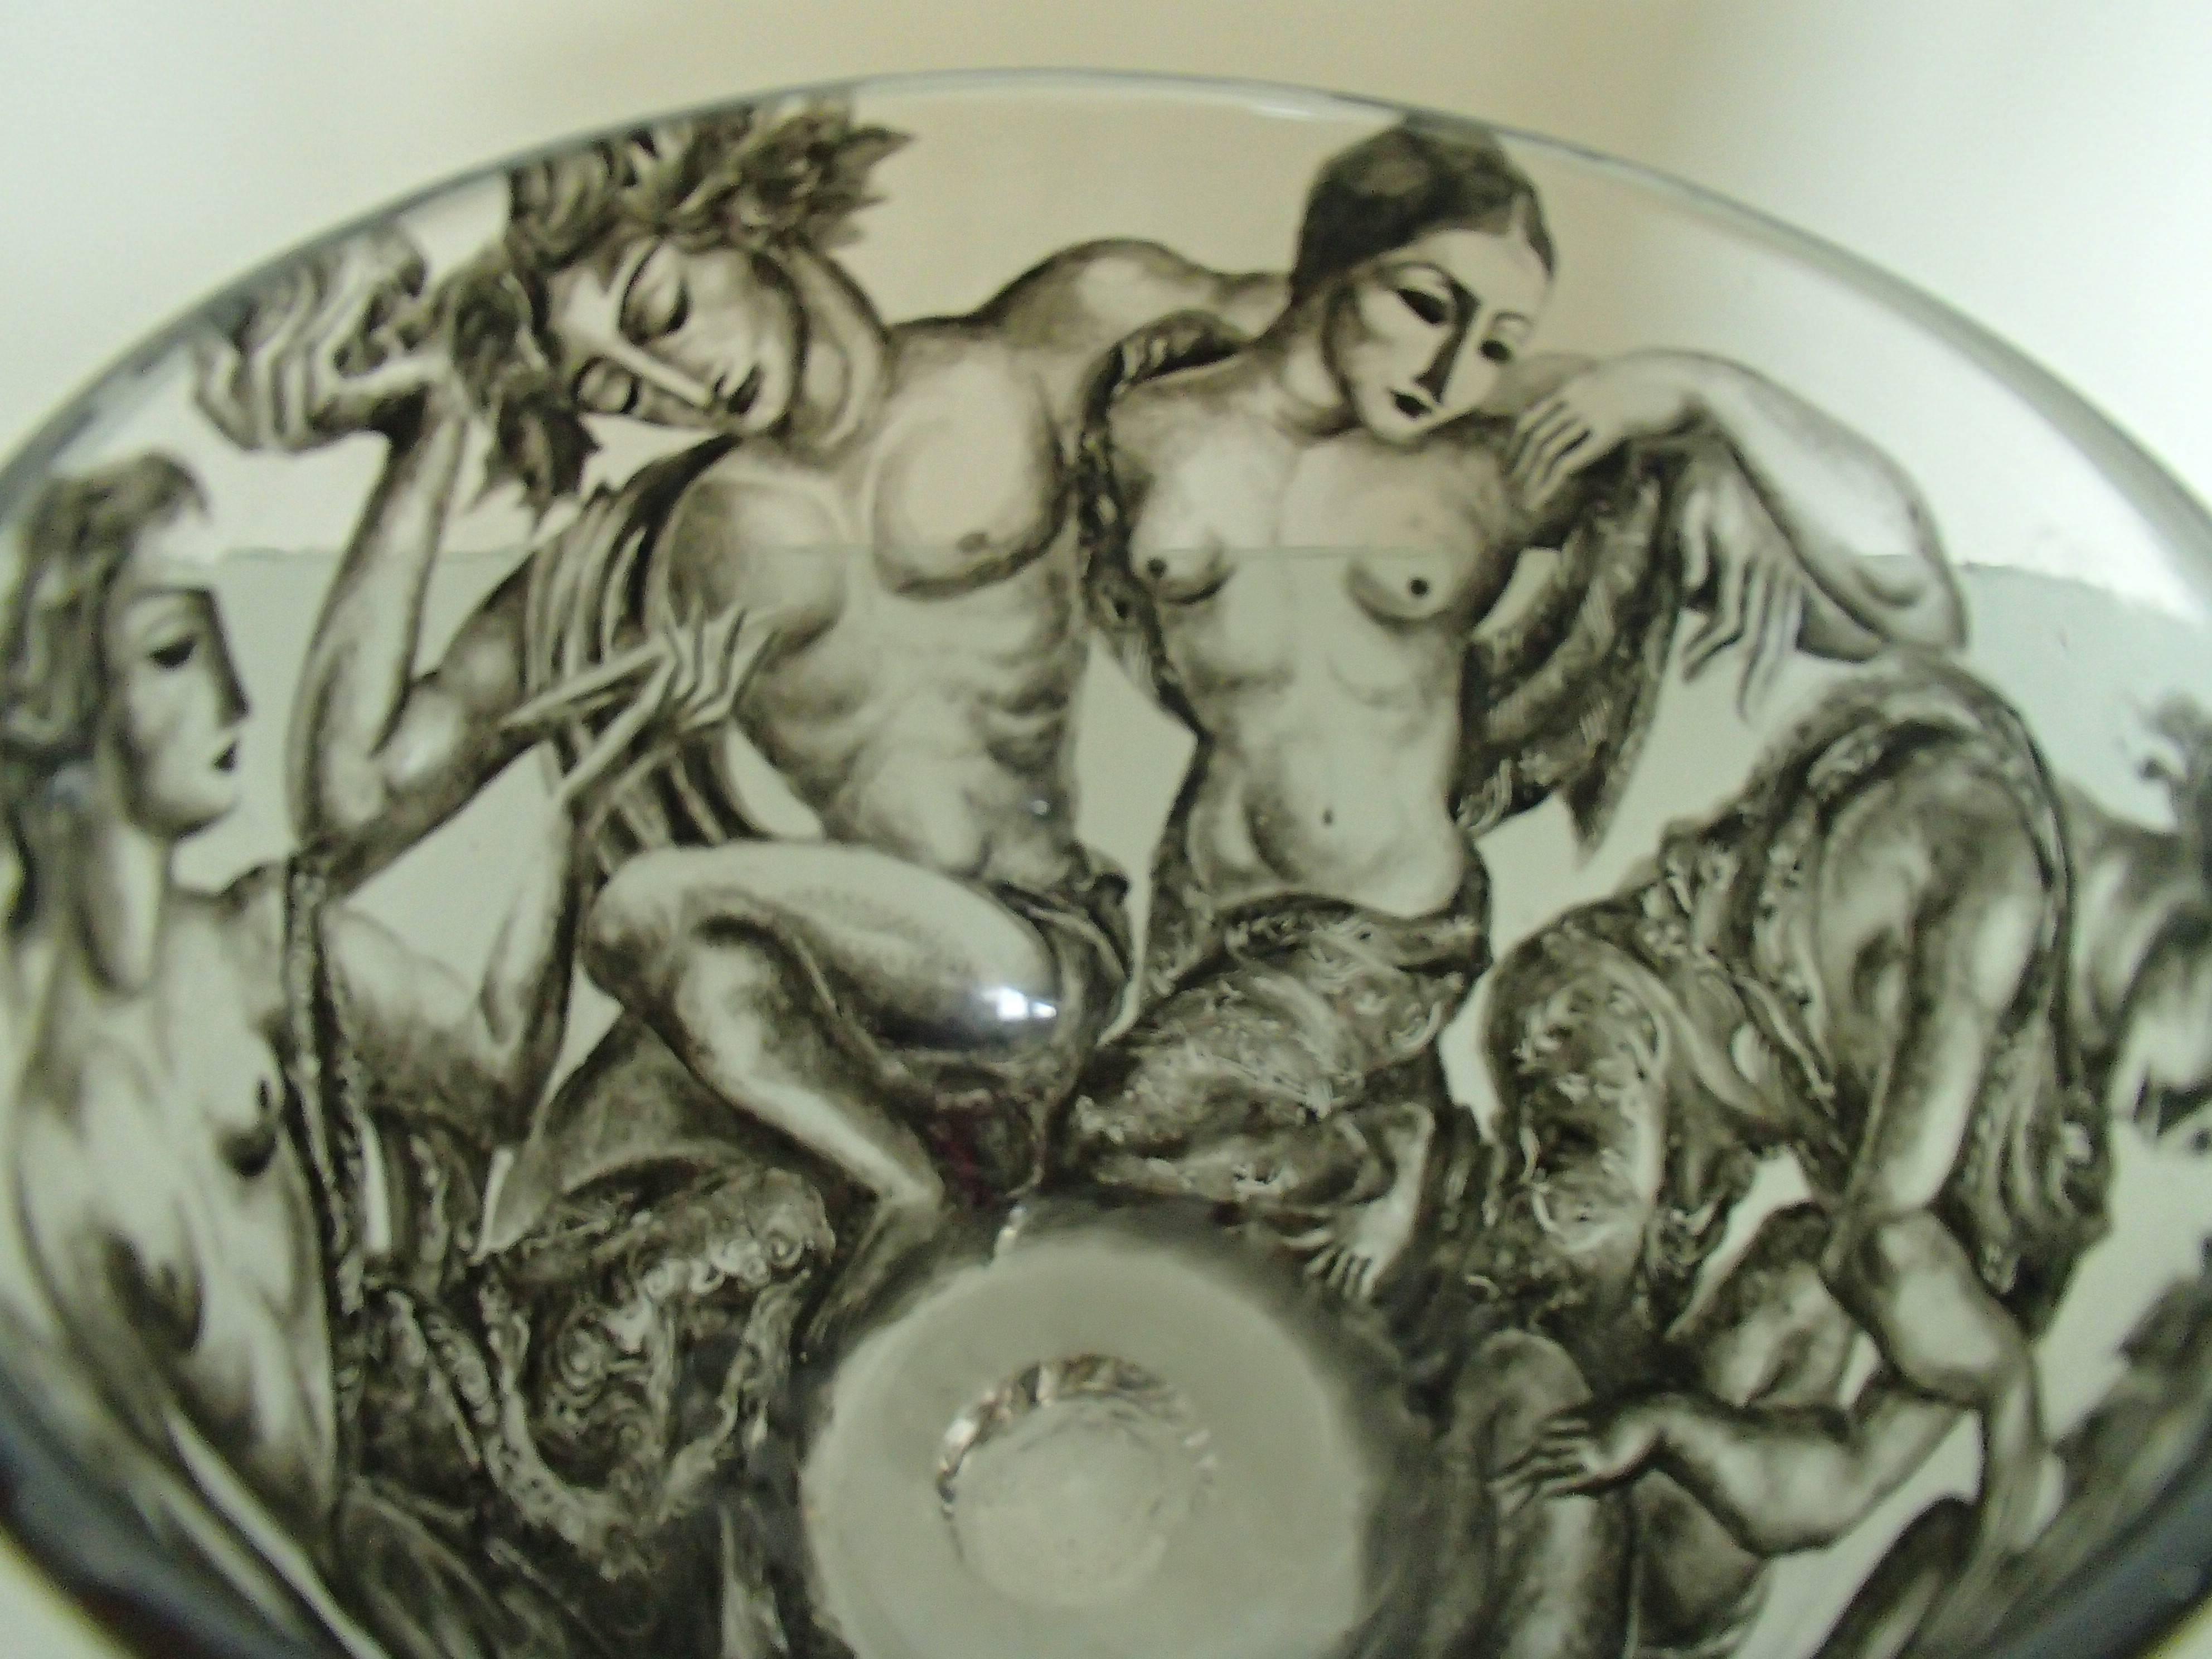 Bauhaus bowl with black cubistic greac romain figures  1